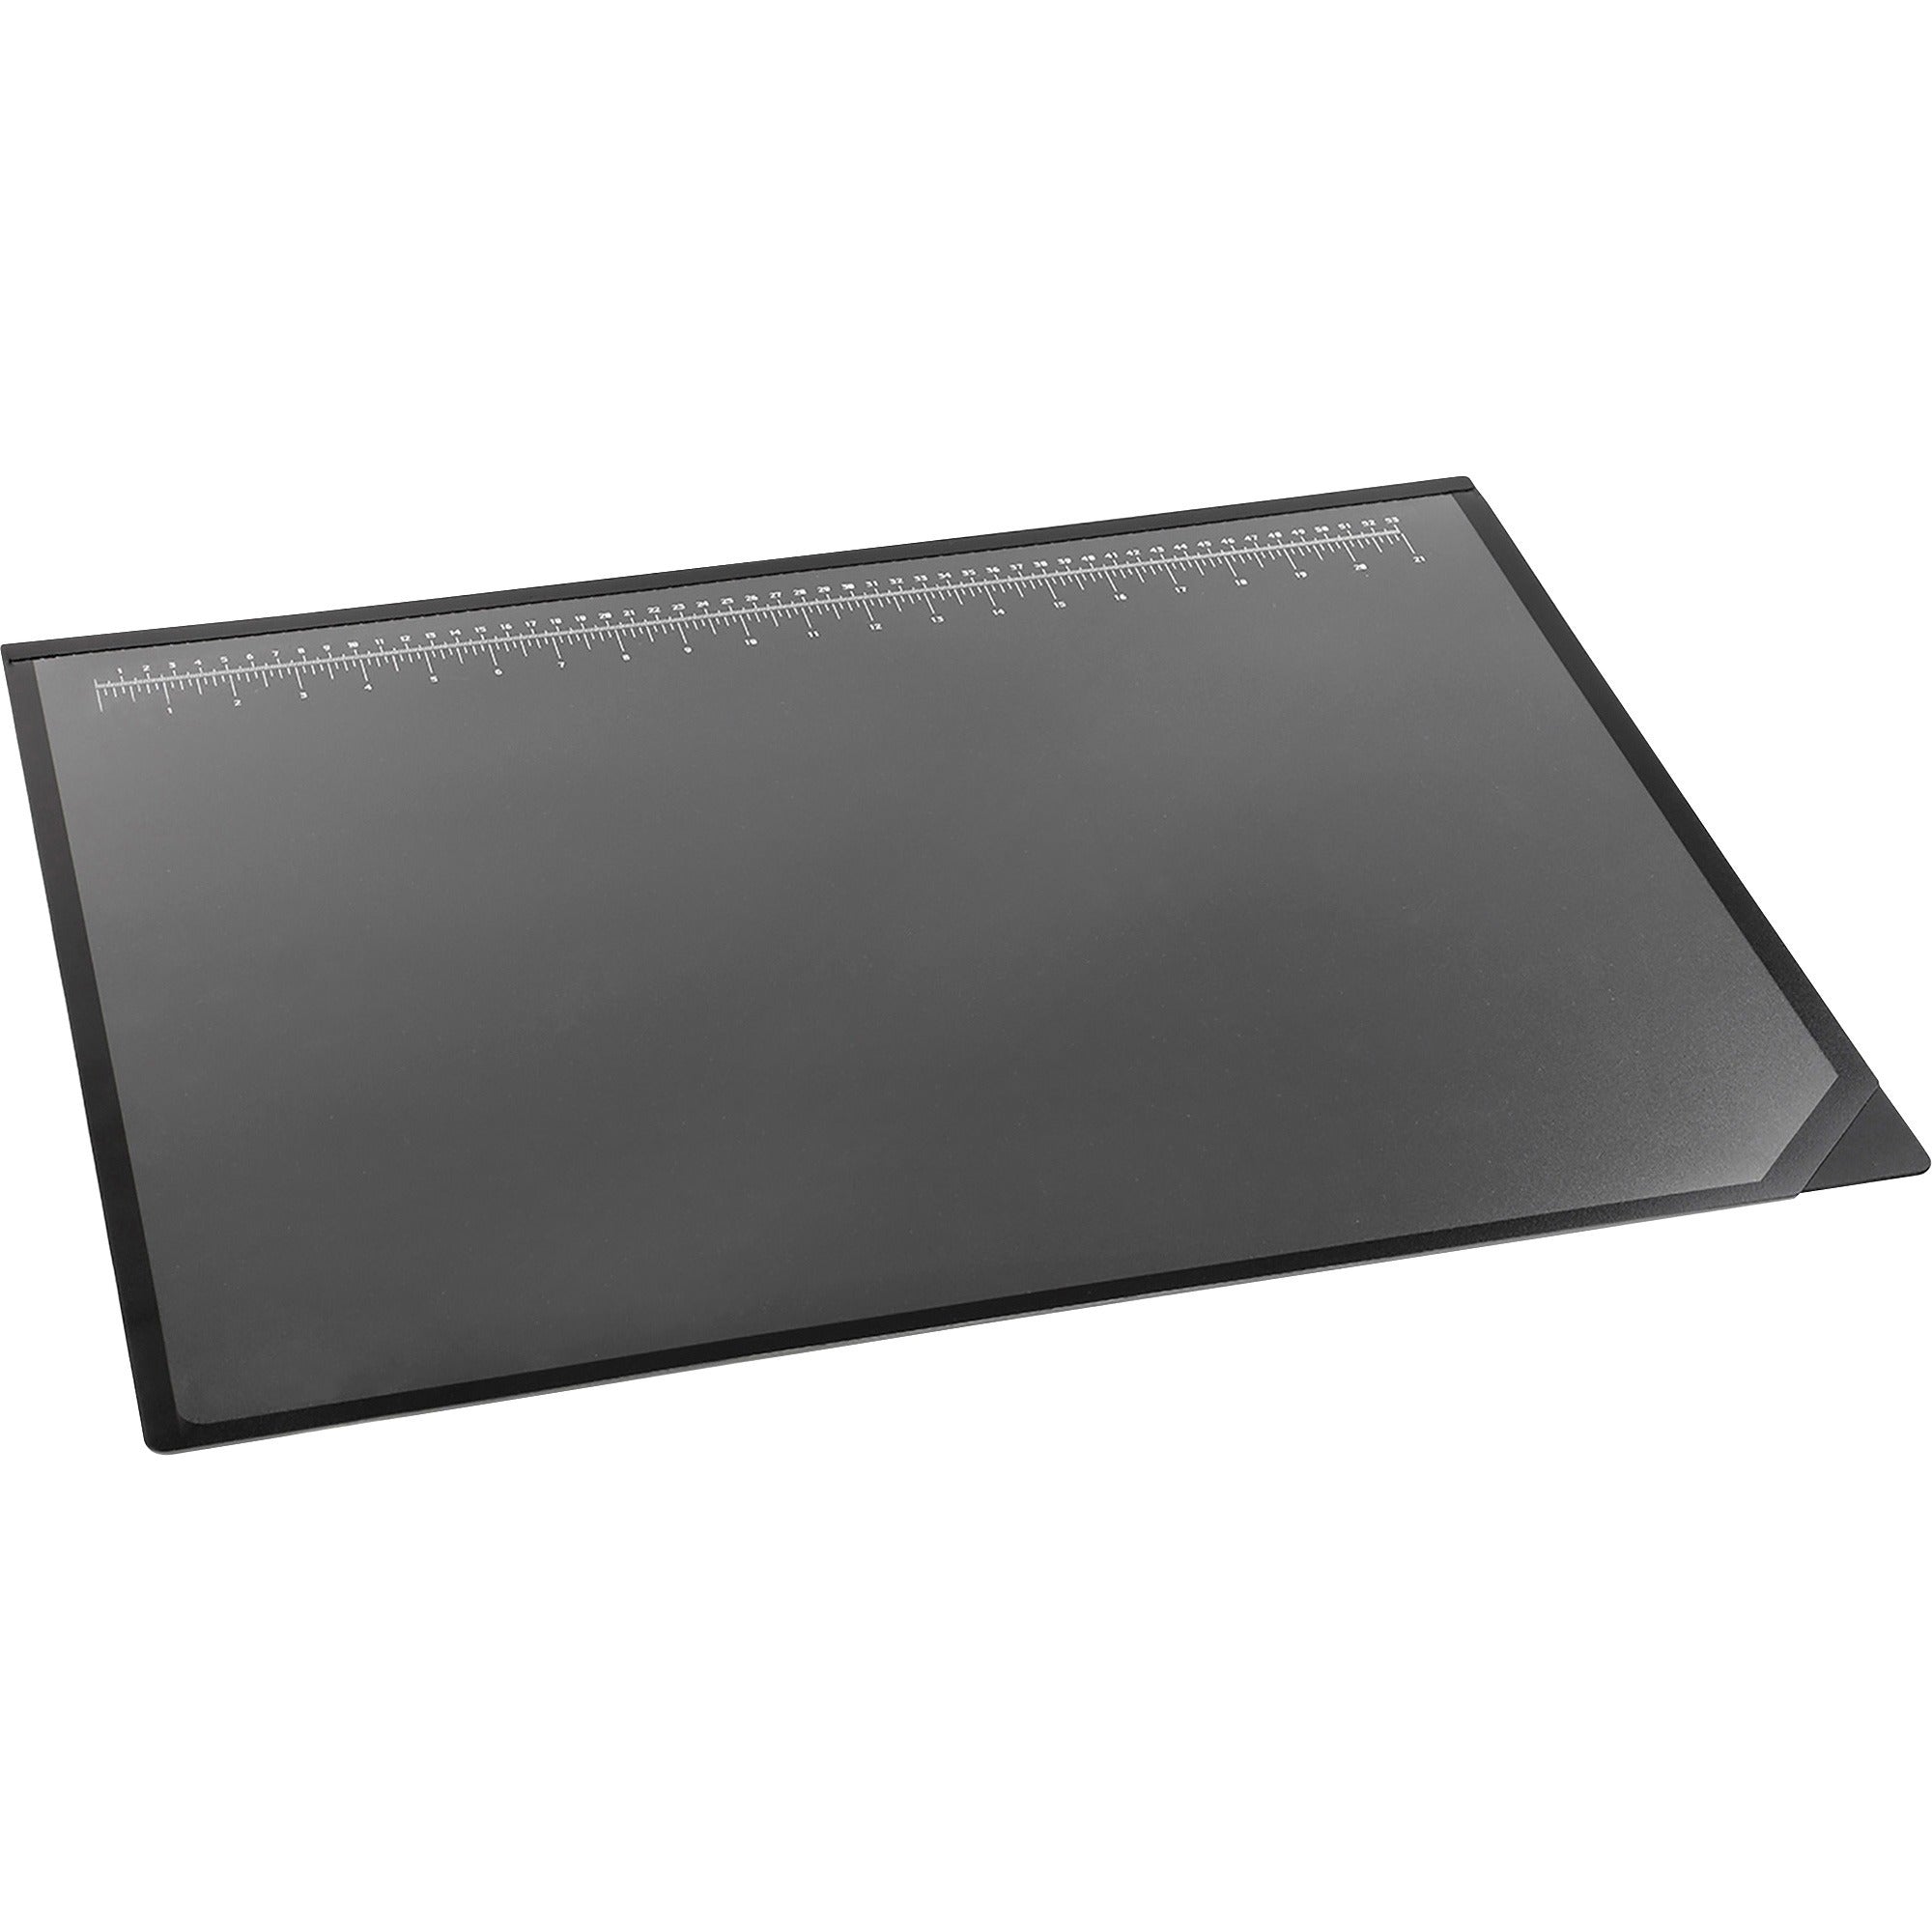 Artistic Desk Pads - Rectangular - 31" Width x 20" Depth - Rubber, Plastic - Black - 